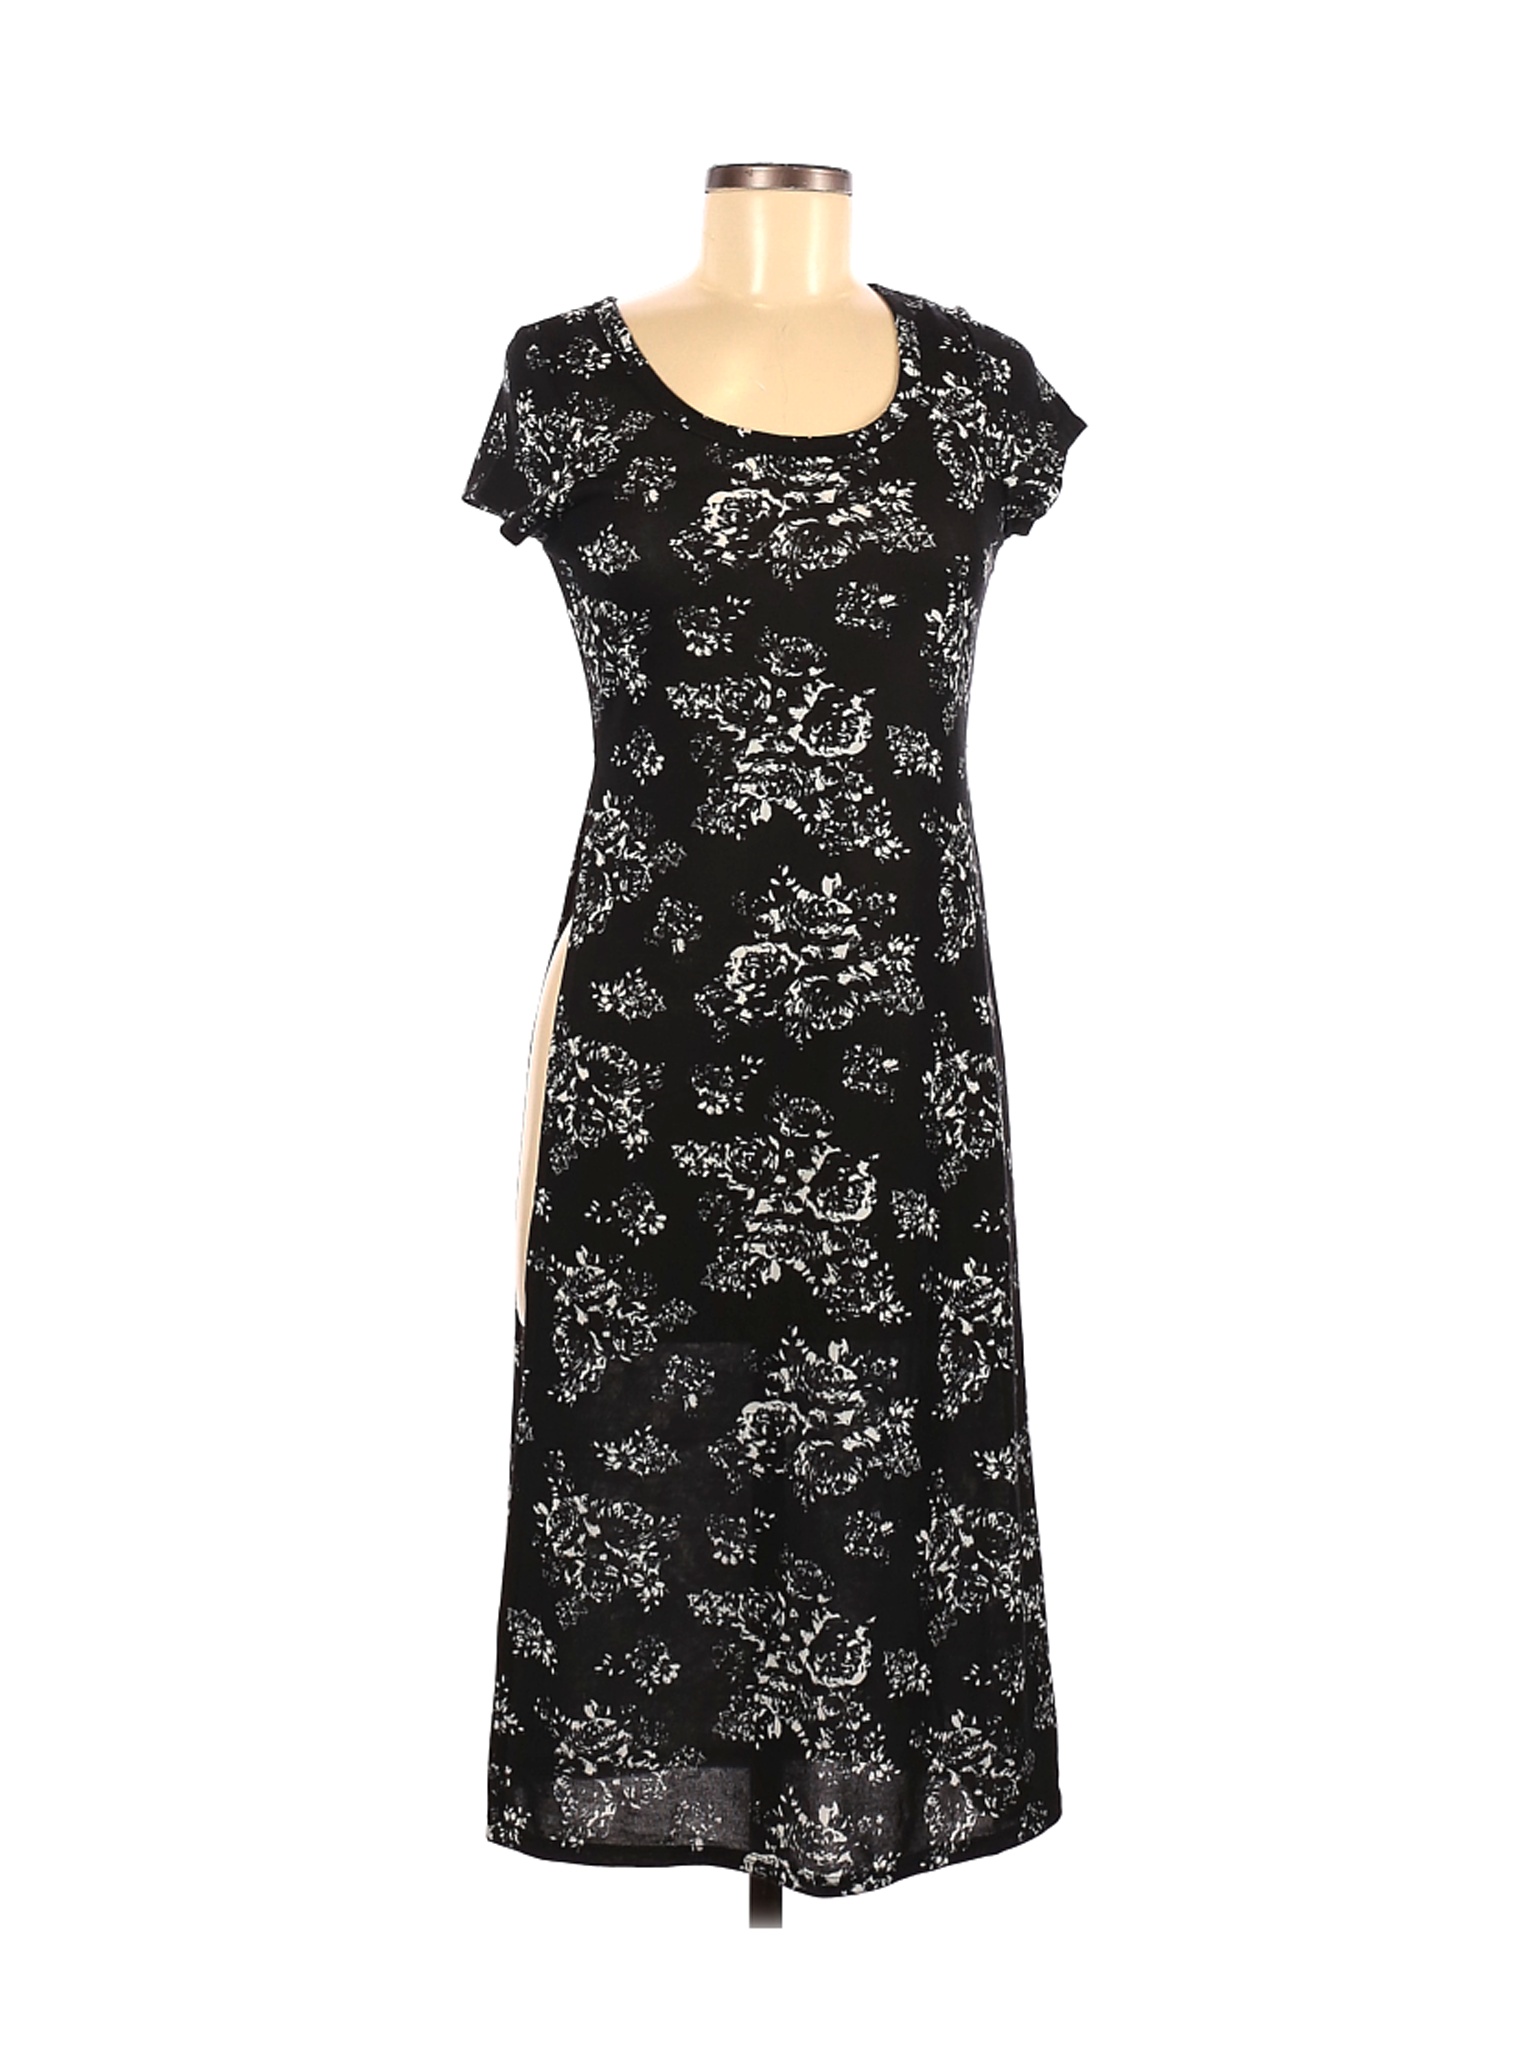 Aeropostale Women Black Casual Dress M | eBay